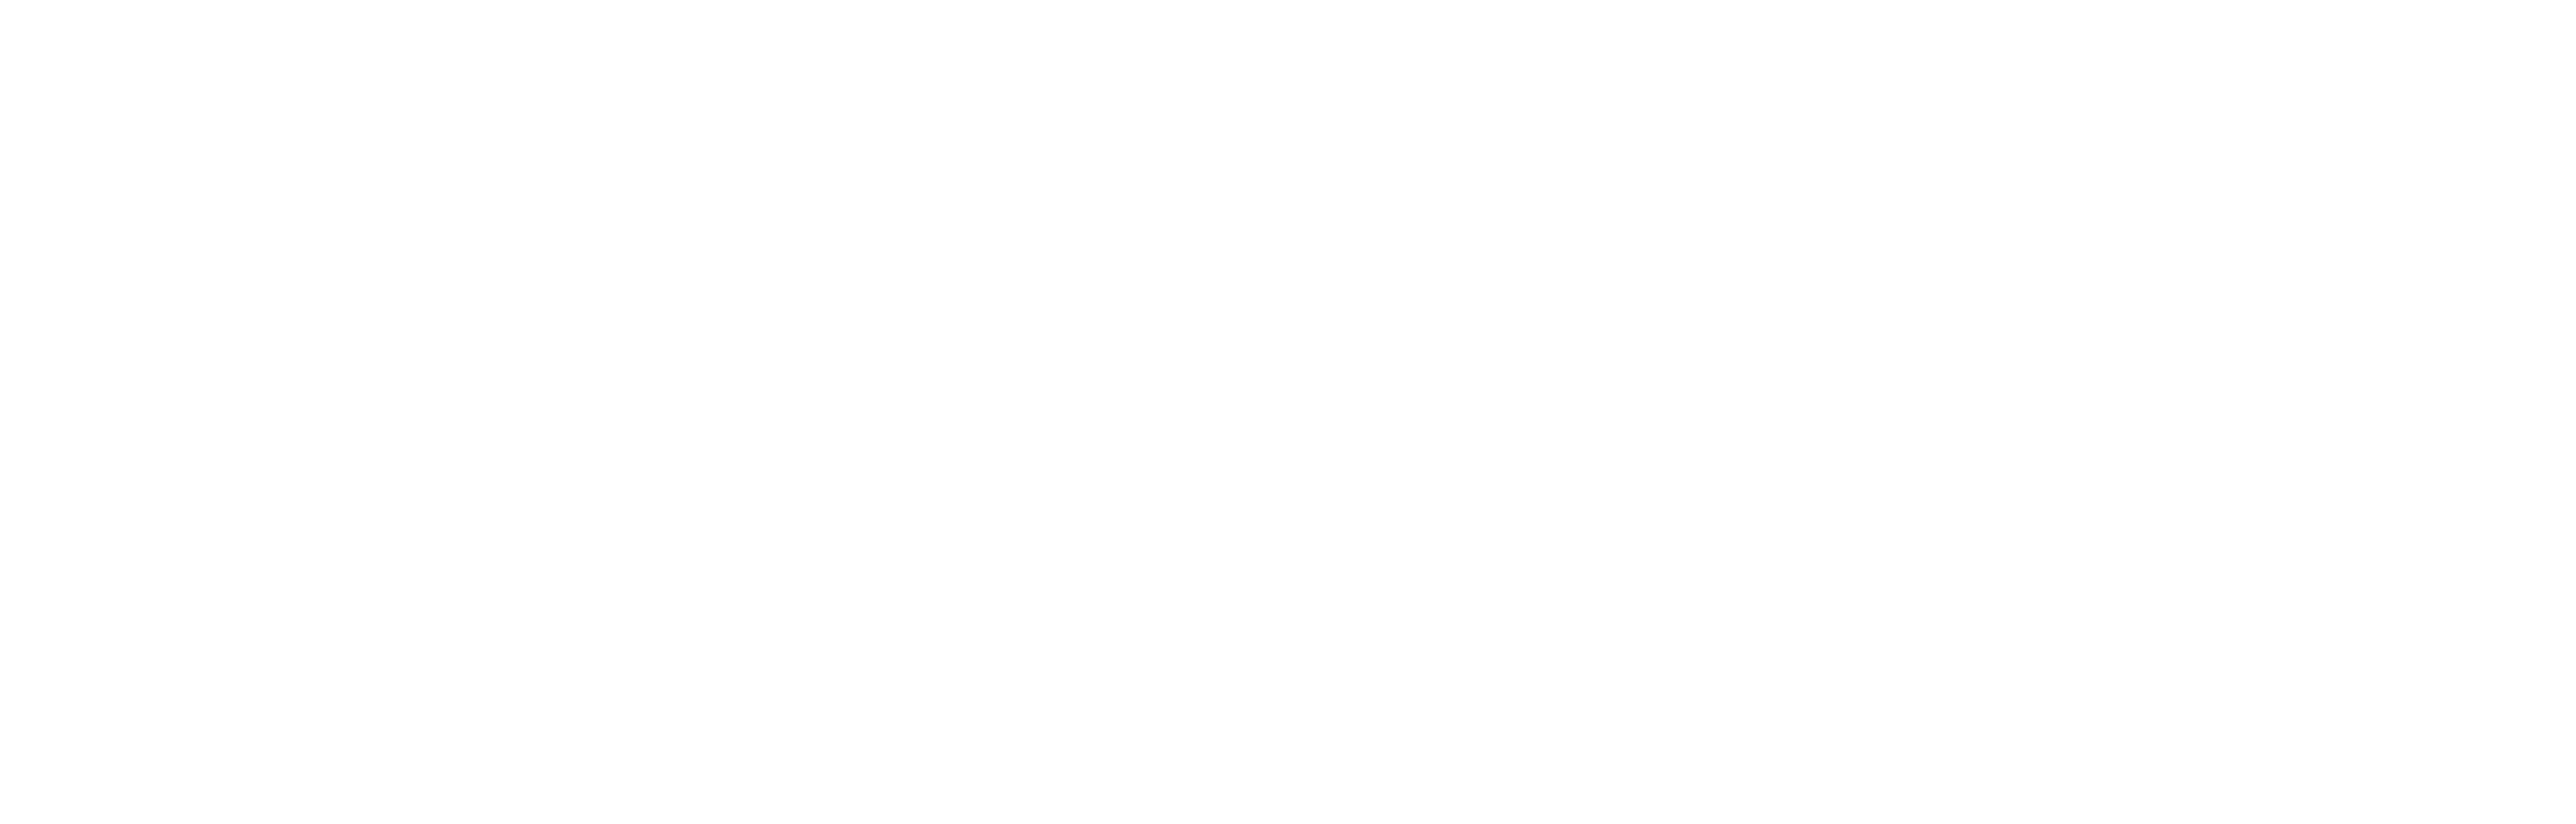 white logo transparent background1 - Cannaffi®